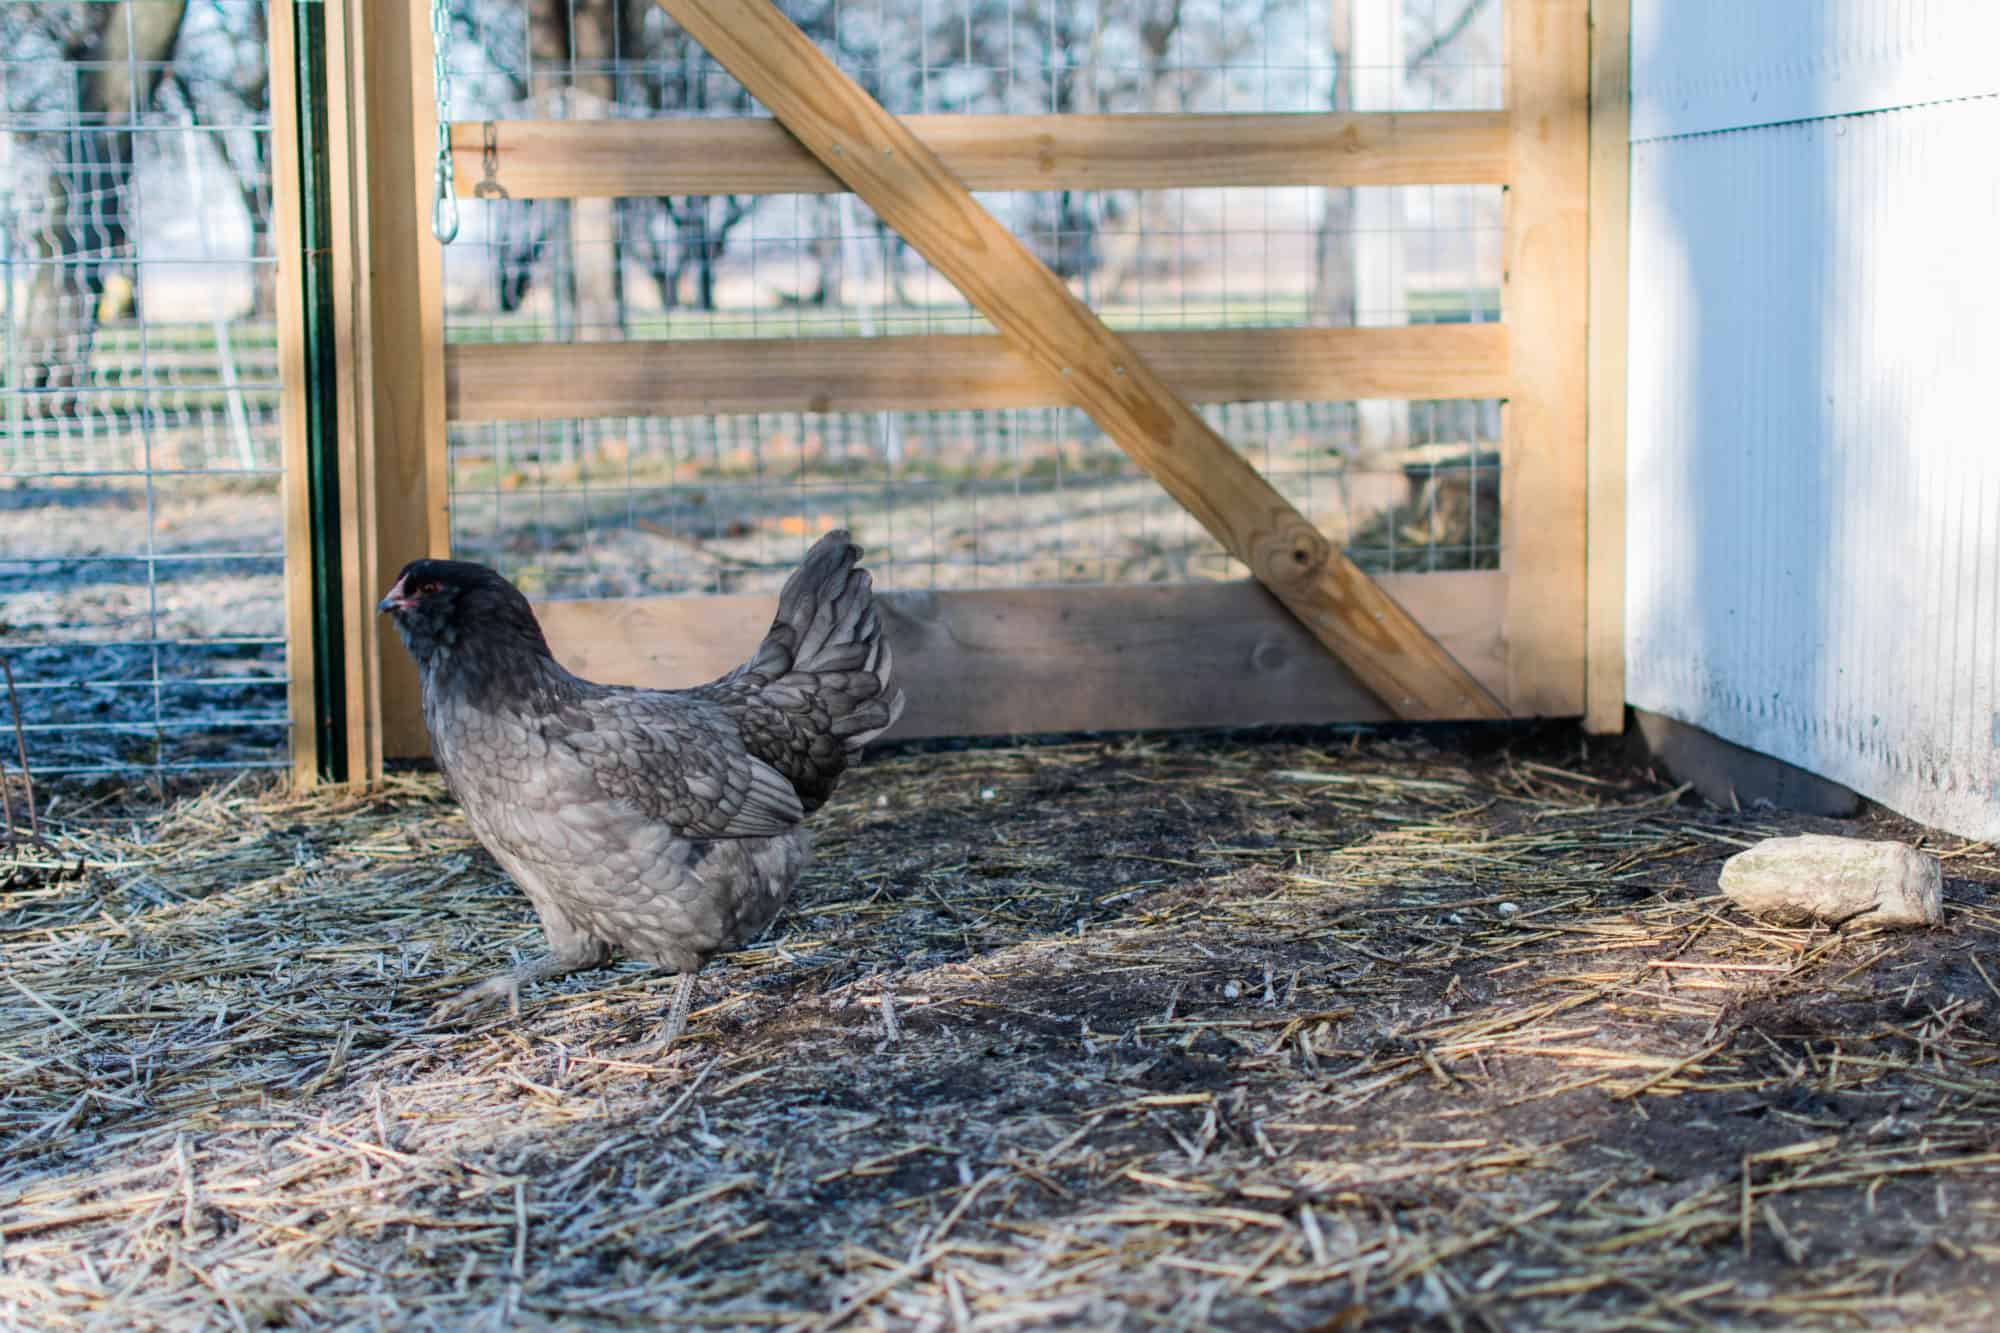 5 reasons to keep backyard chickens